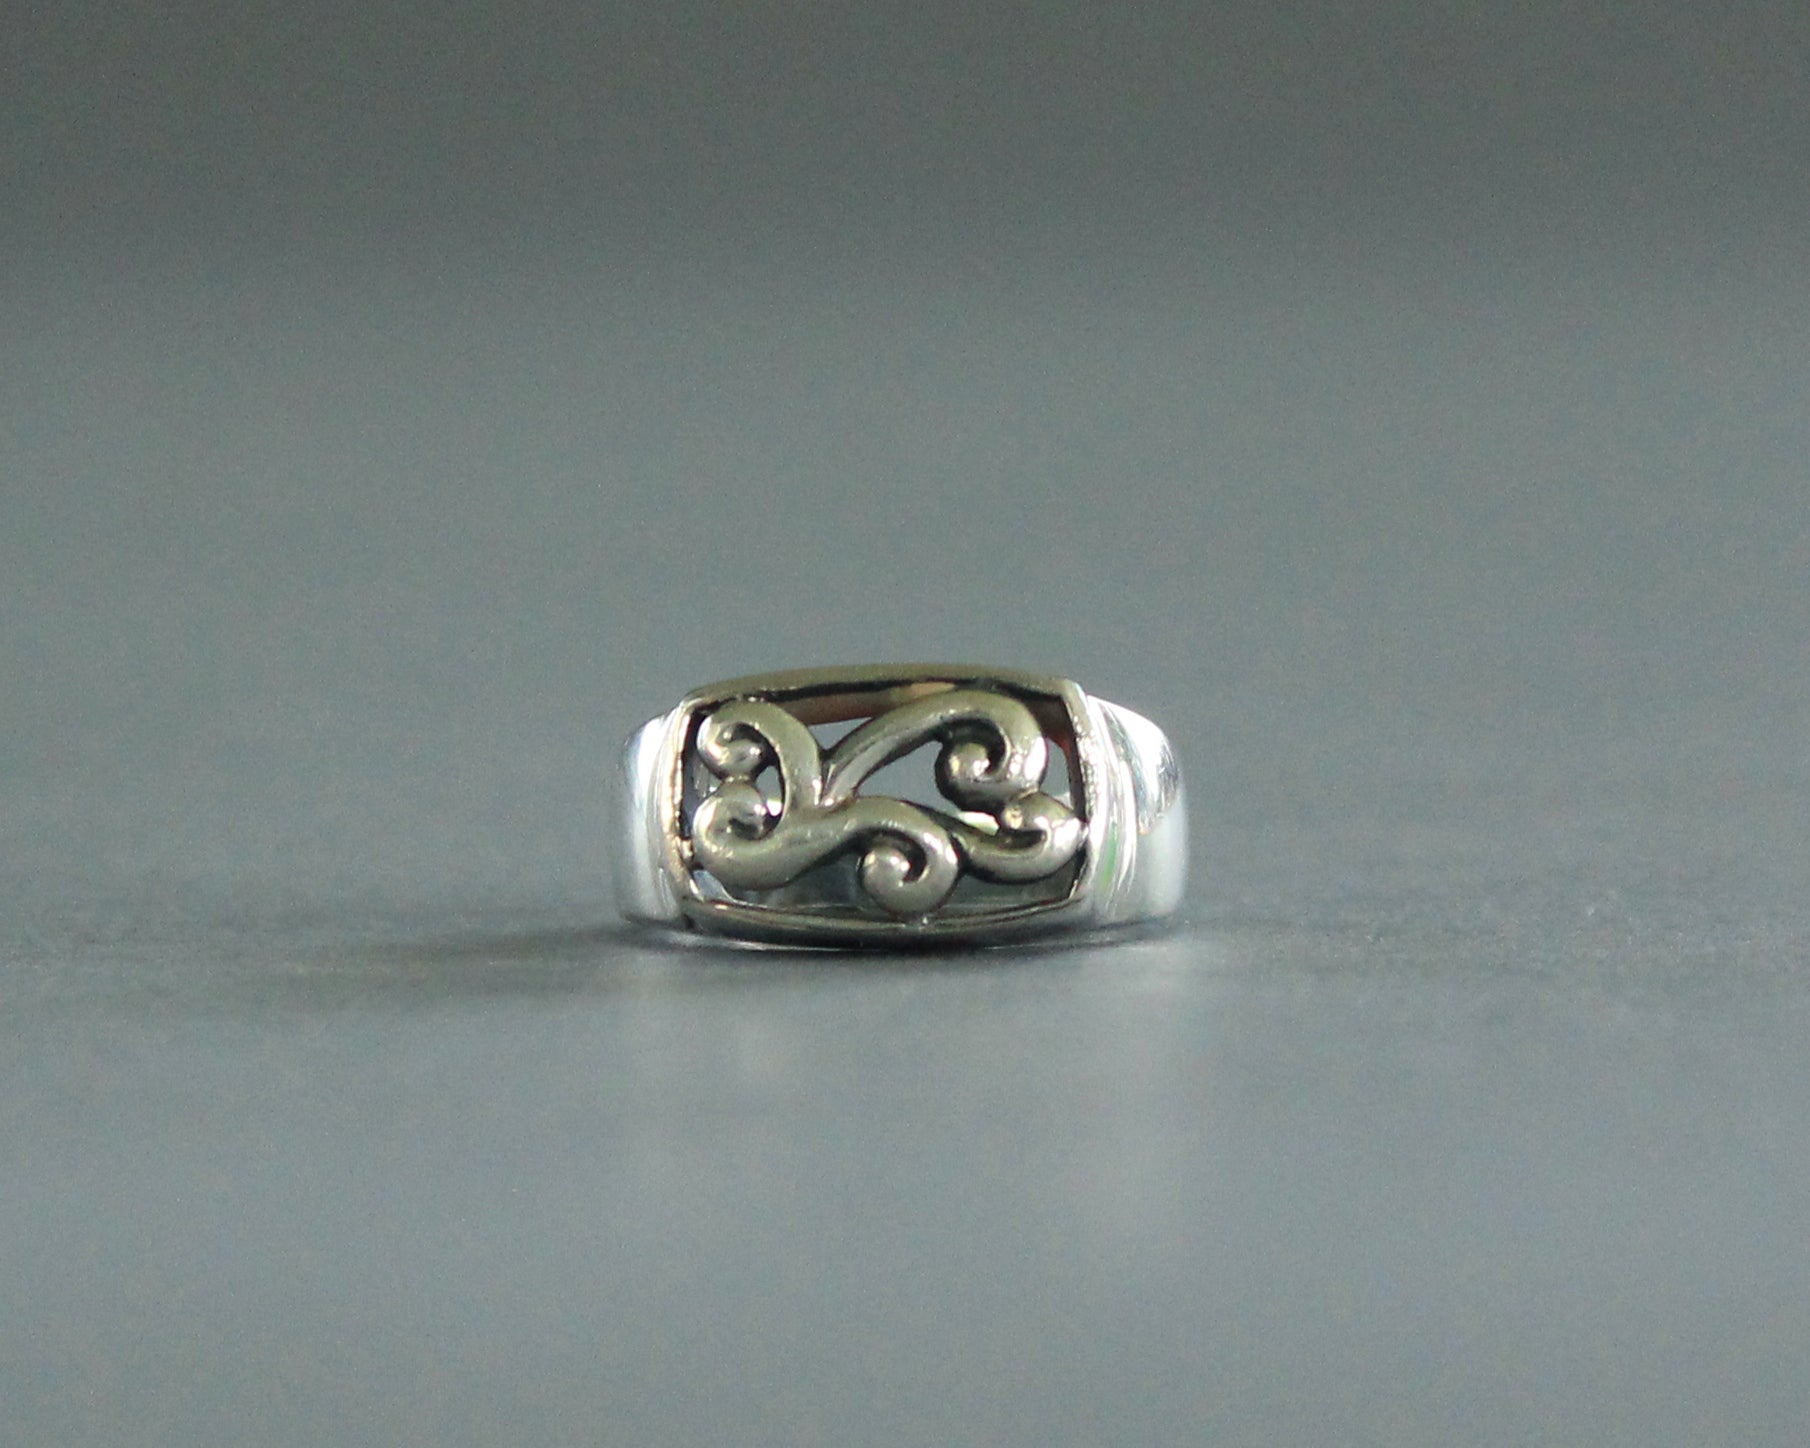 southeast asian yogi ring sterling silver size 5.5